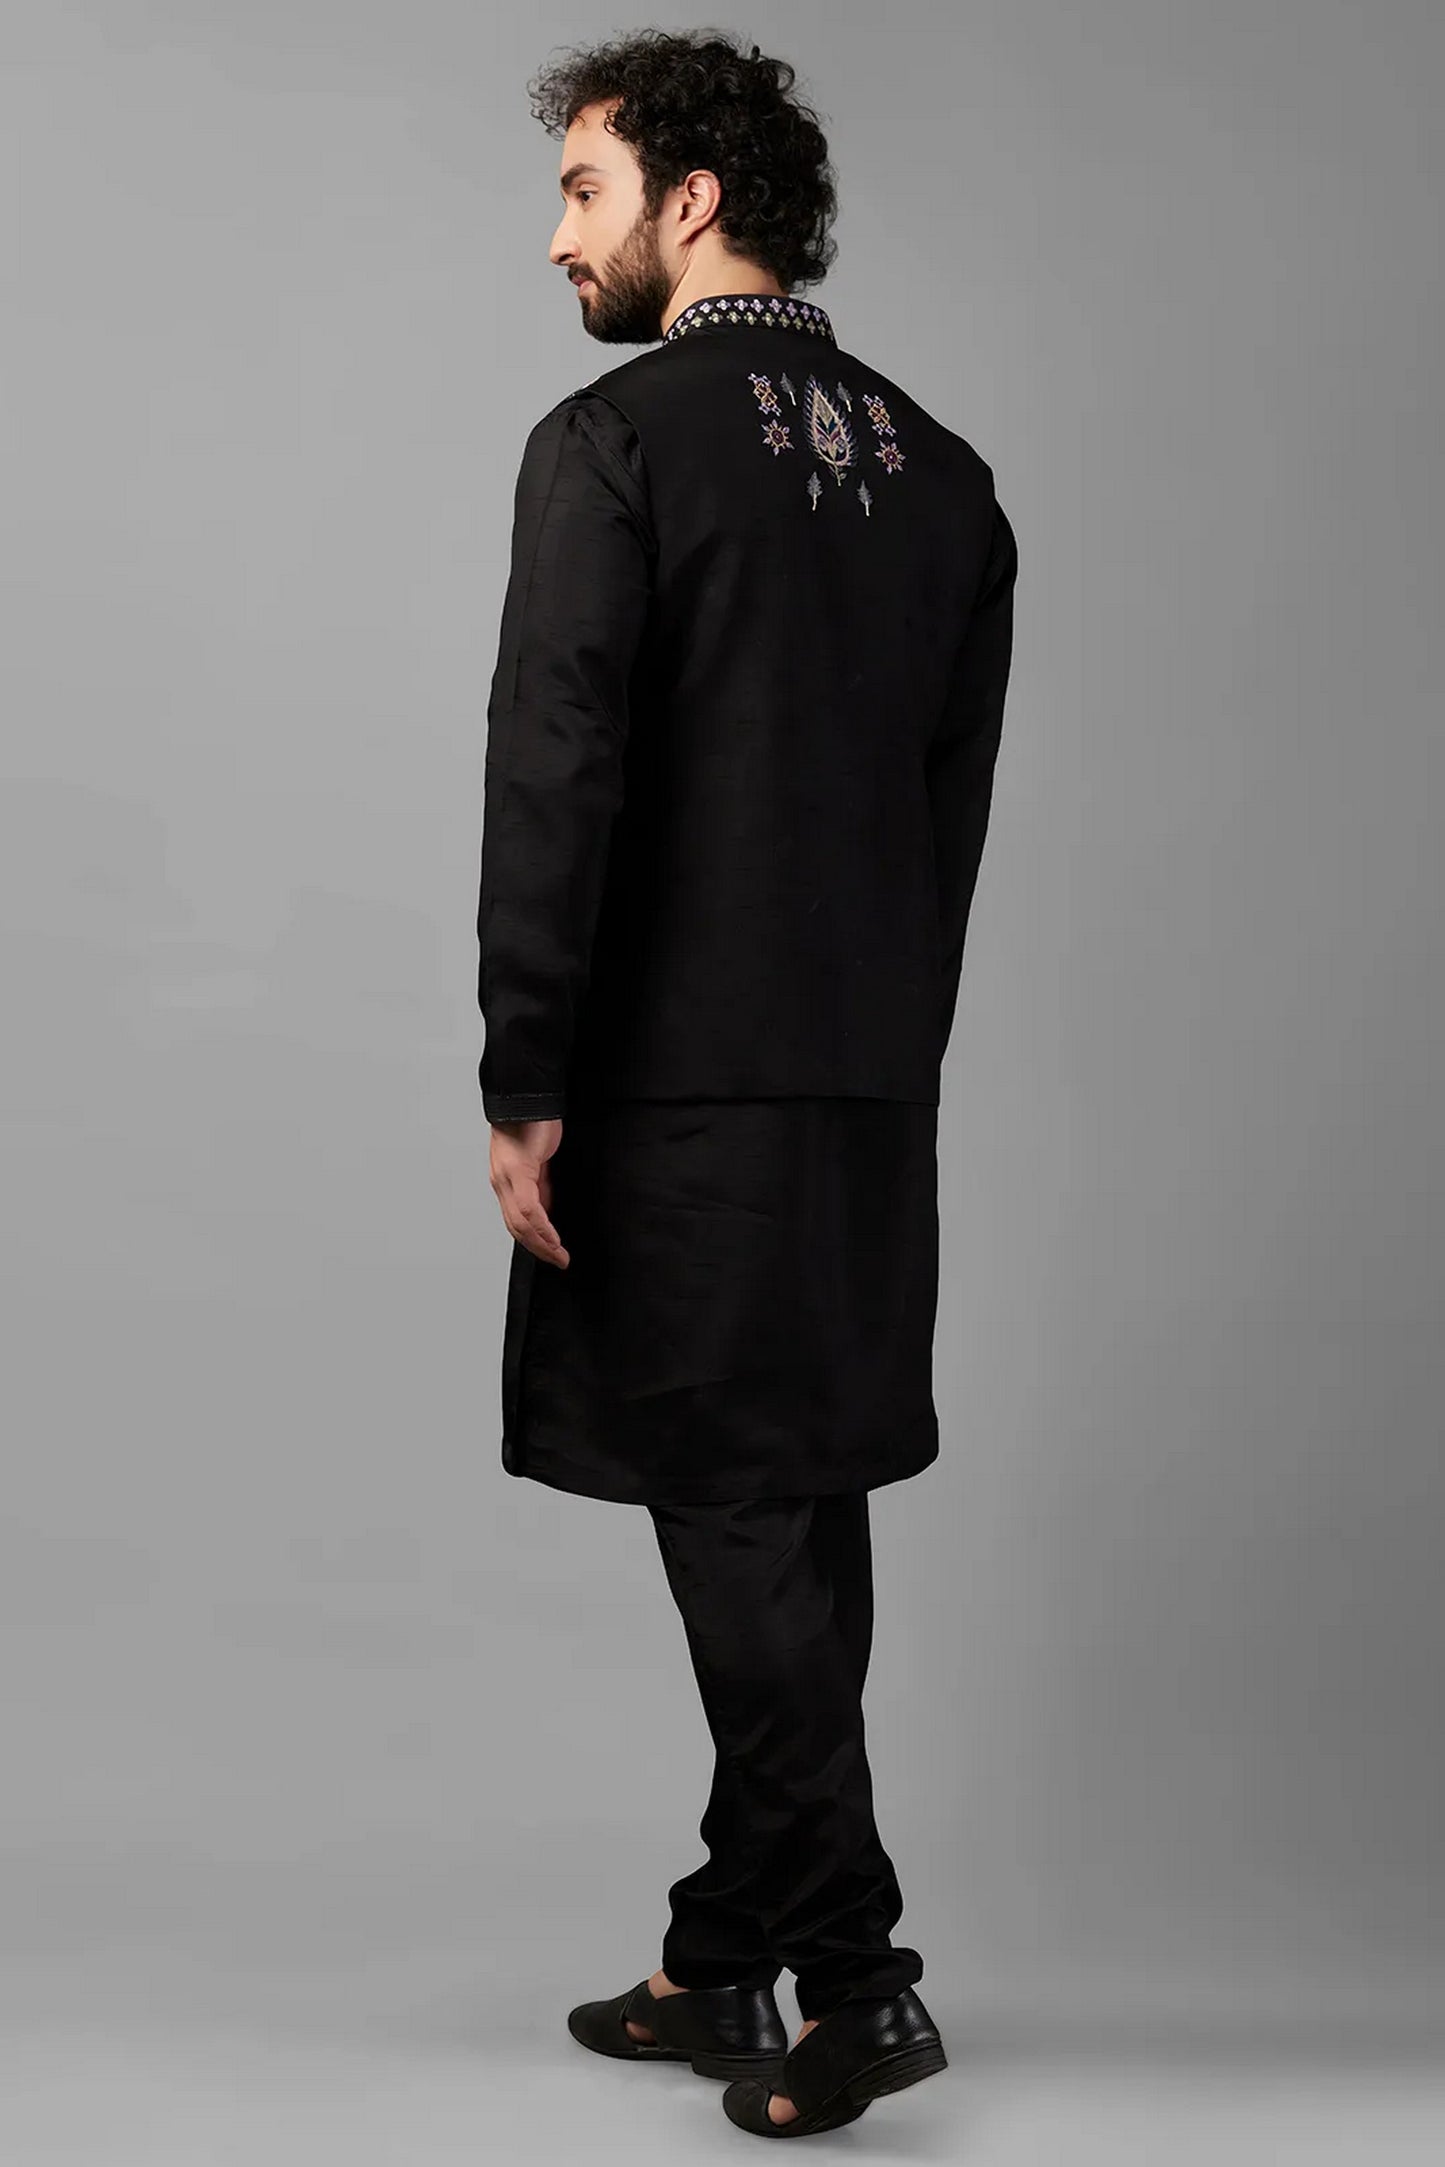 Black Silk Men's Wedding Suit Waistcoat with Kurta & Pant - Embroidery Work